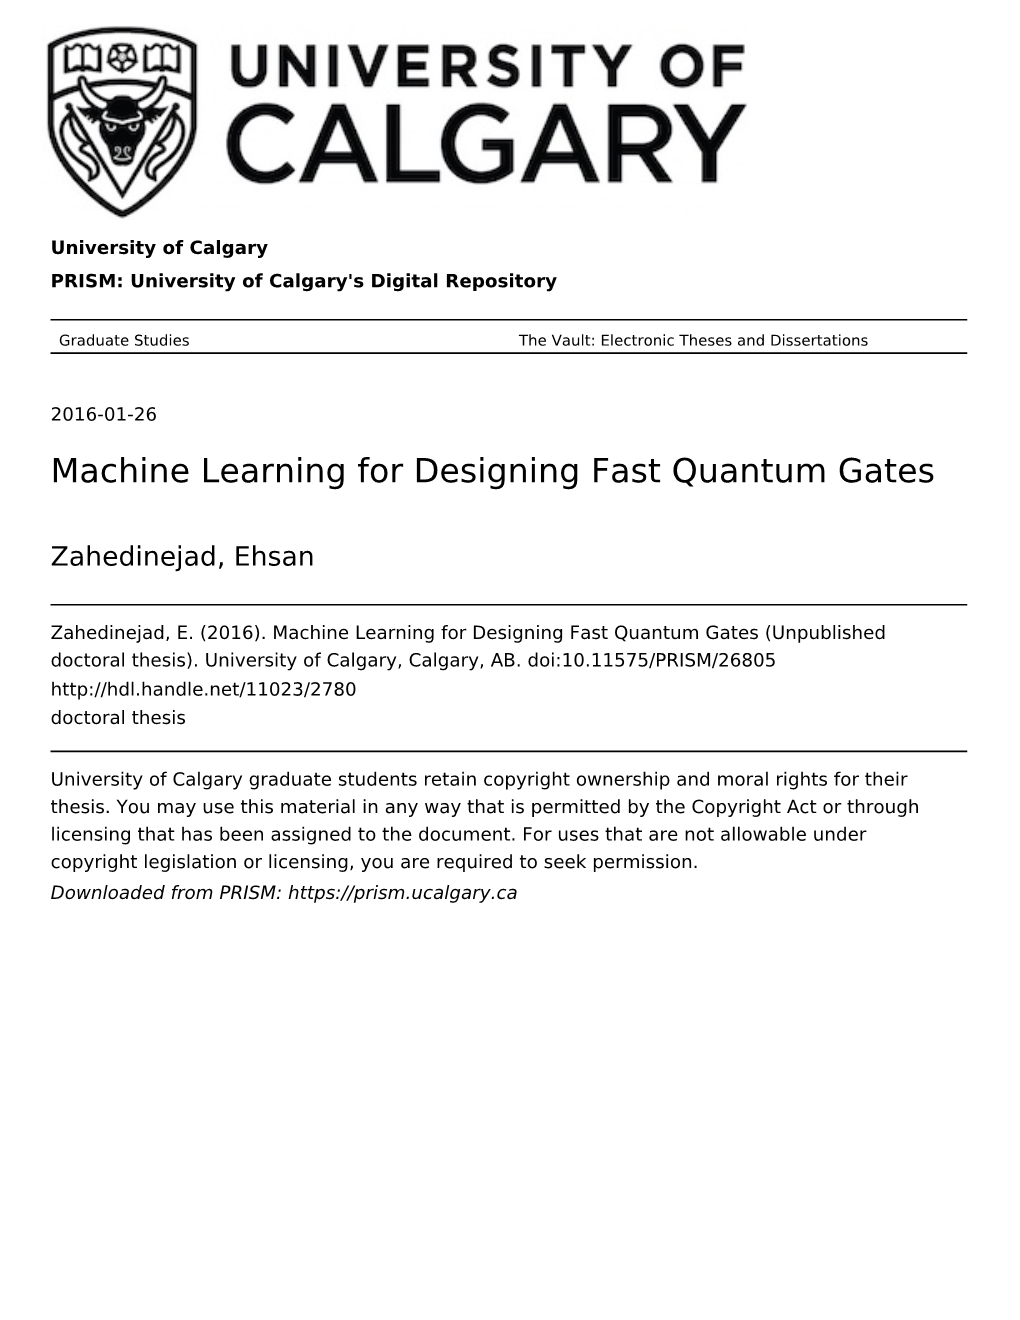 Machine Learning for Designing Fast Quantum Gates